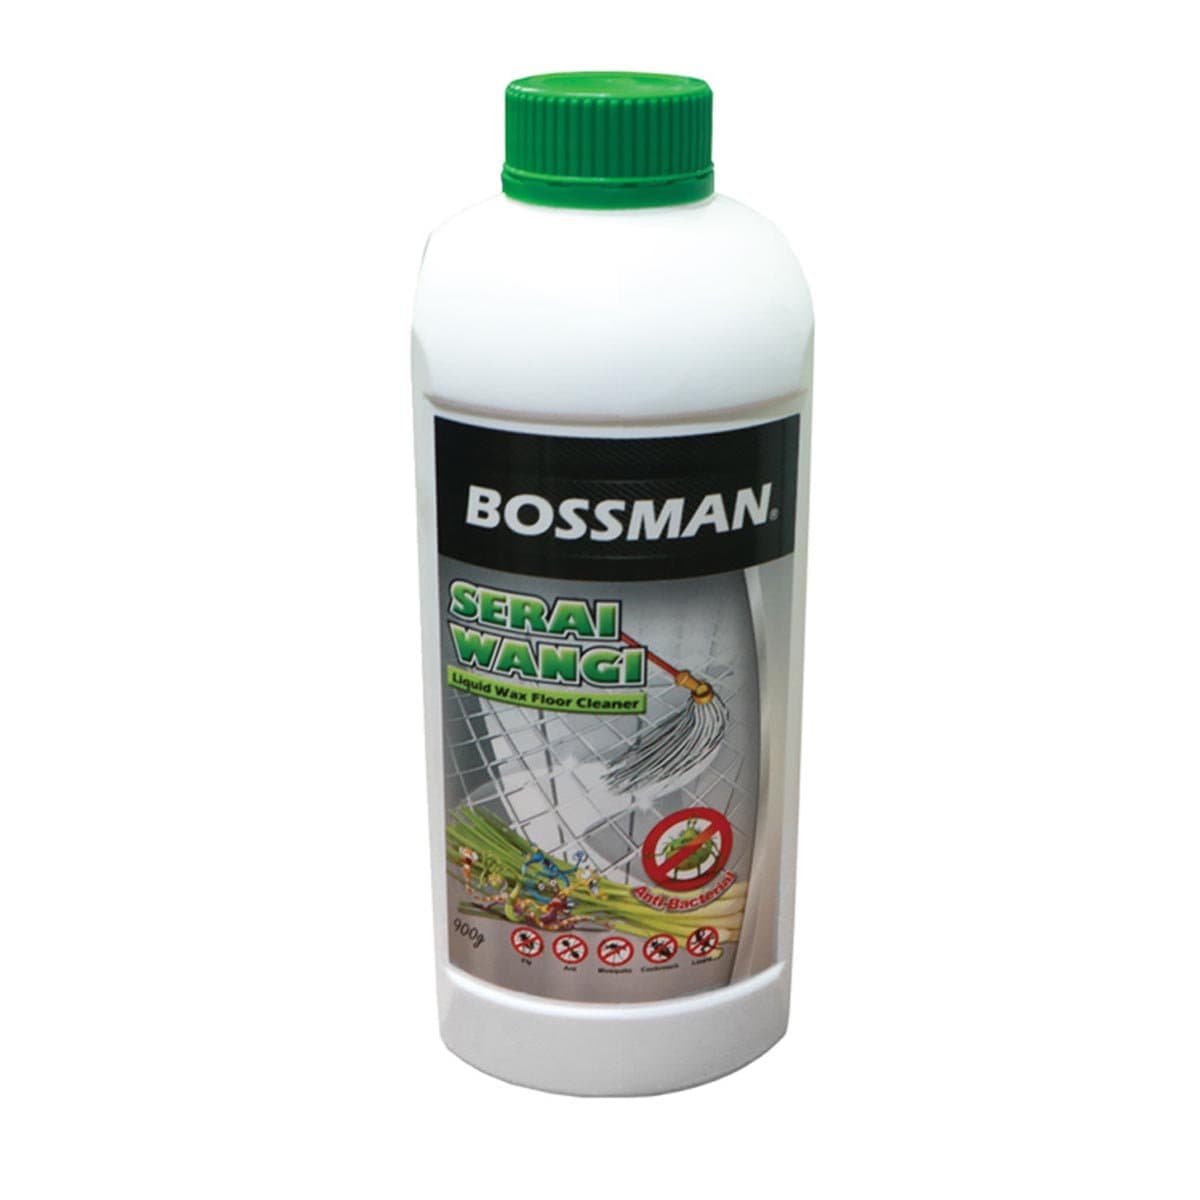 BOSSMAN Liquid Wax Floor Cleaner (900g)